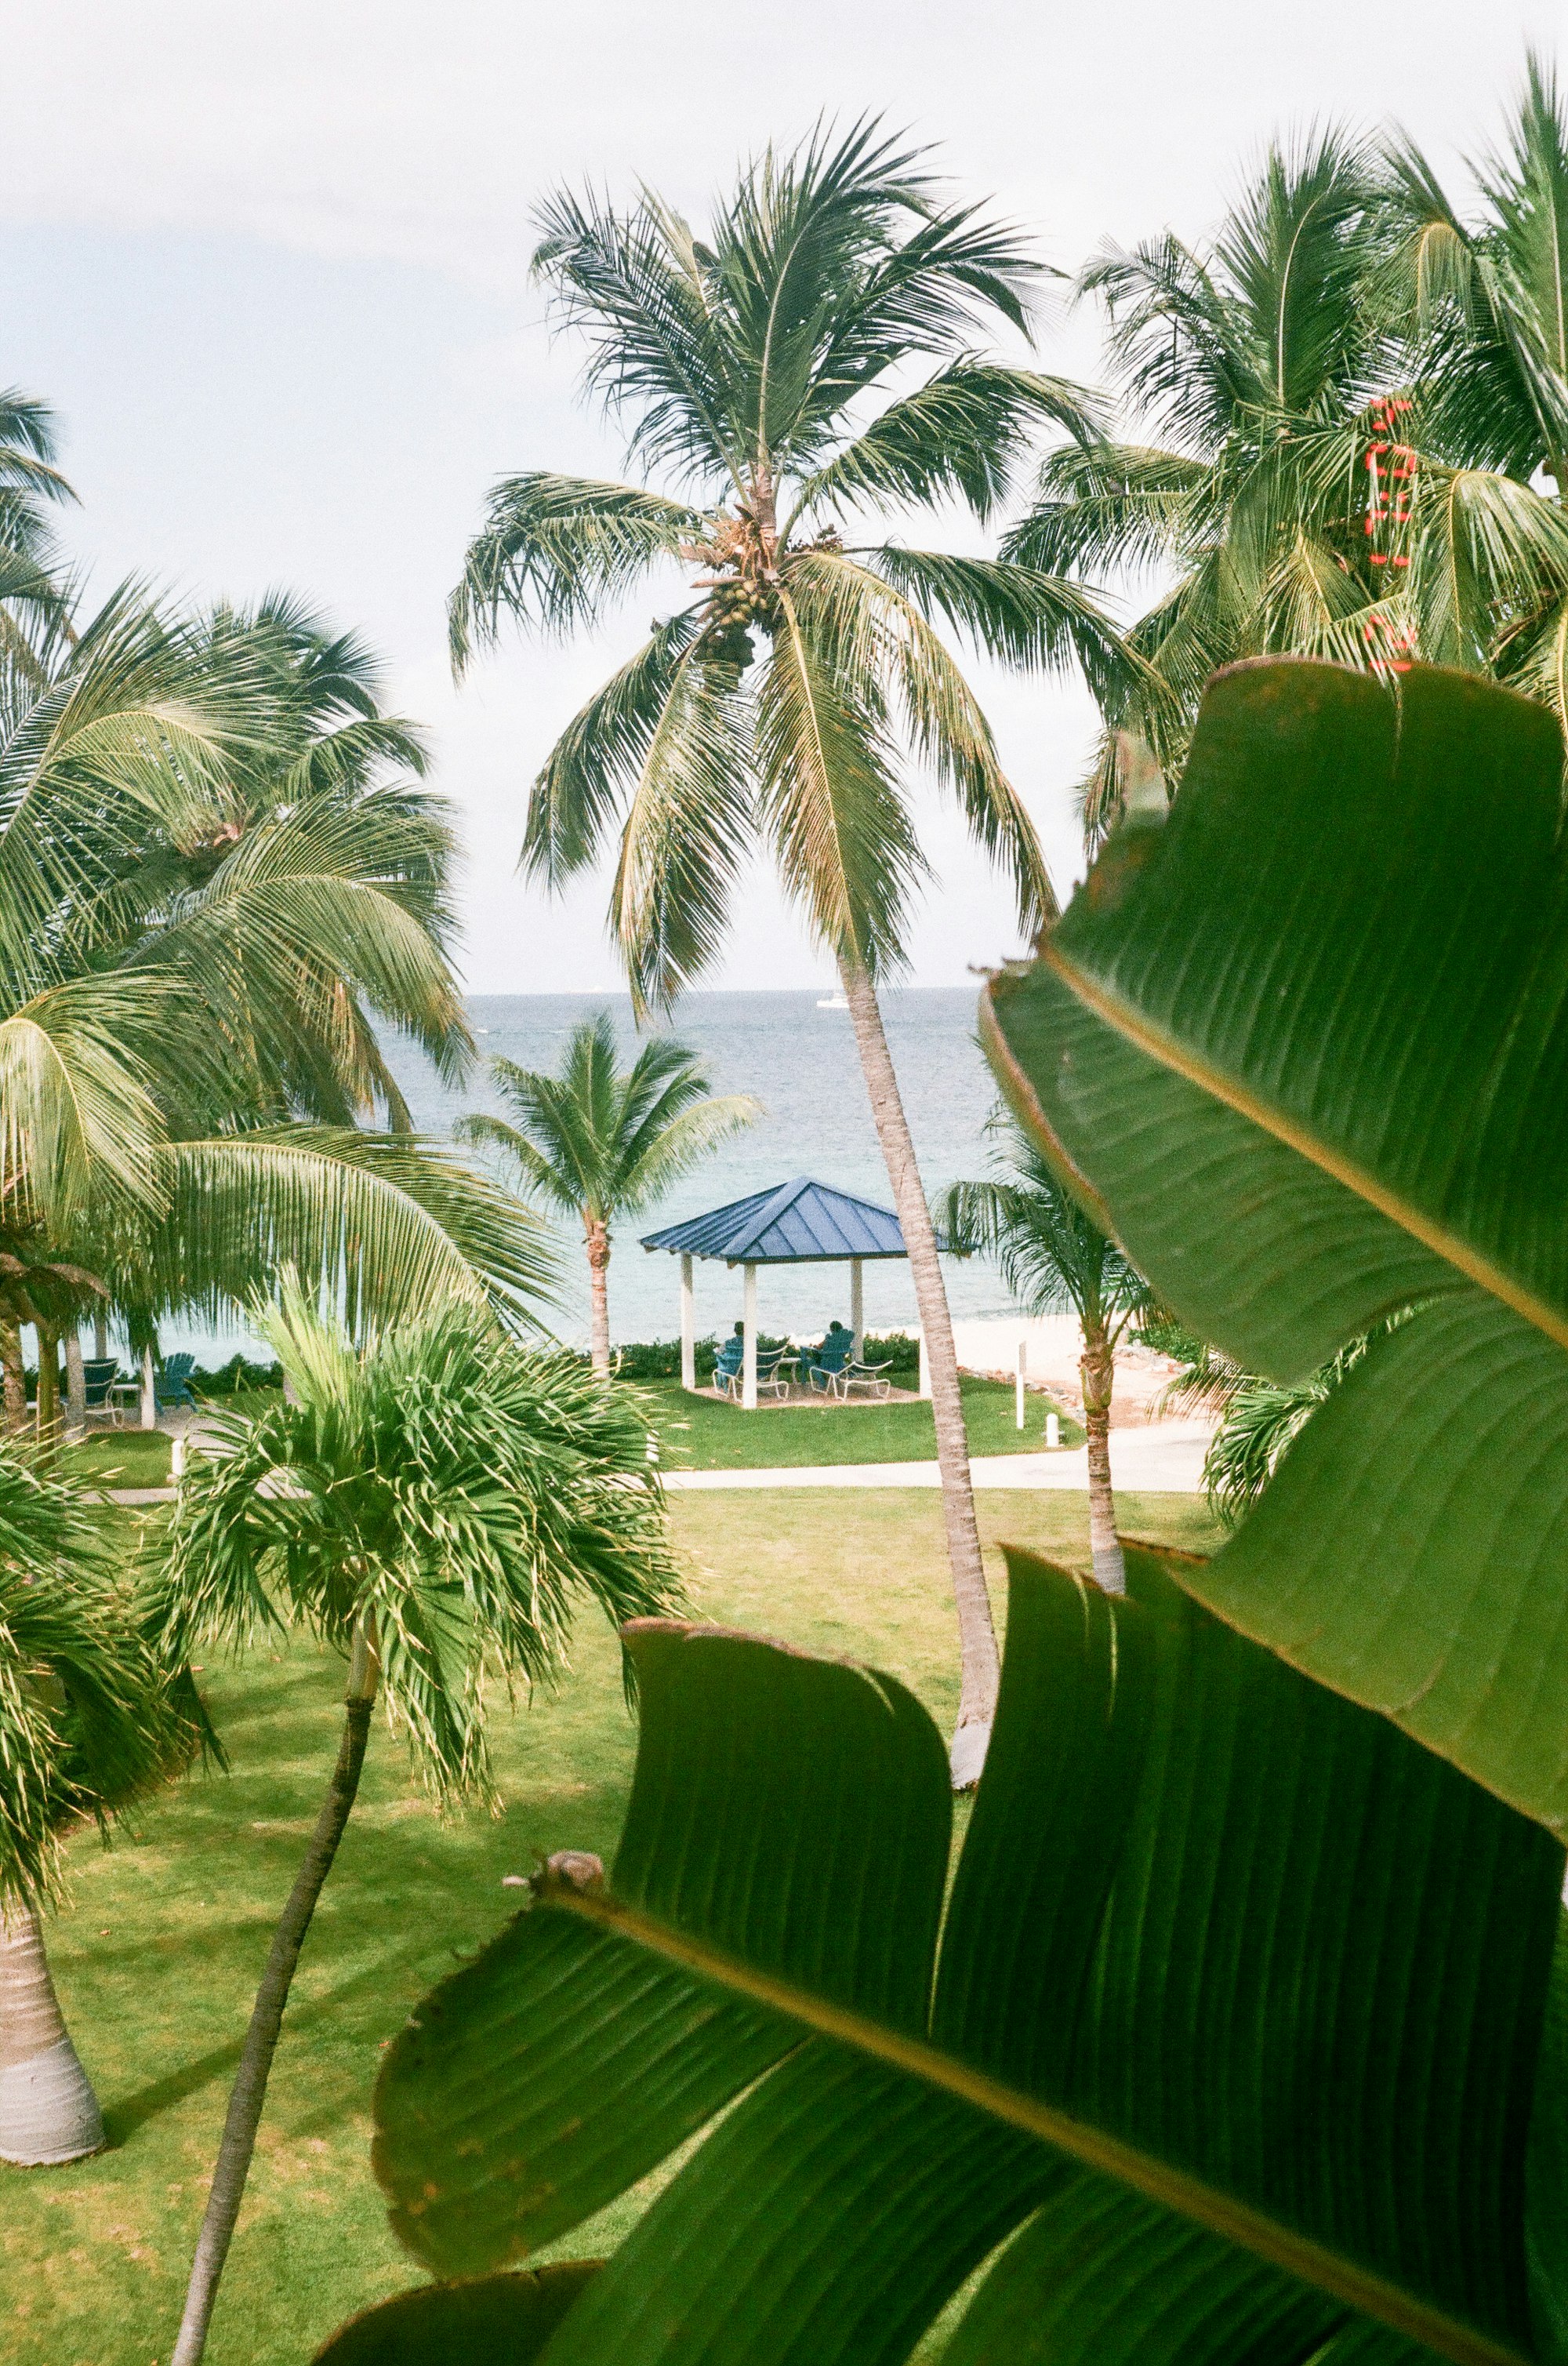 Beach Cabana.
Ocean.
Film.
Tropics.
Tropical Palm.
Landscape.
Nature.